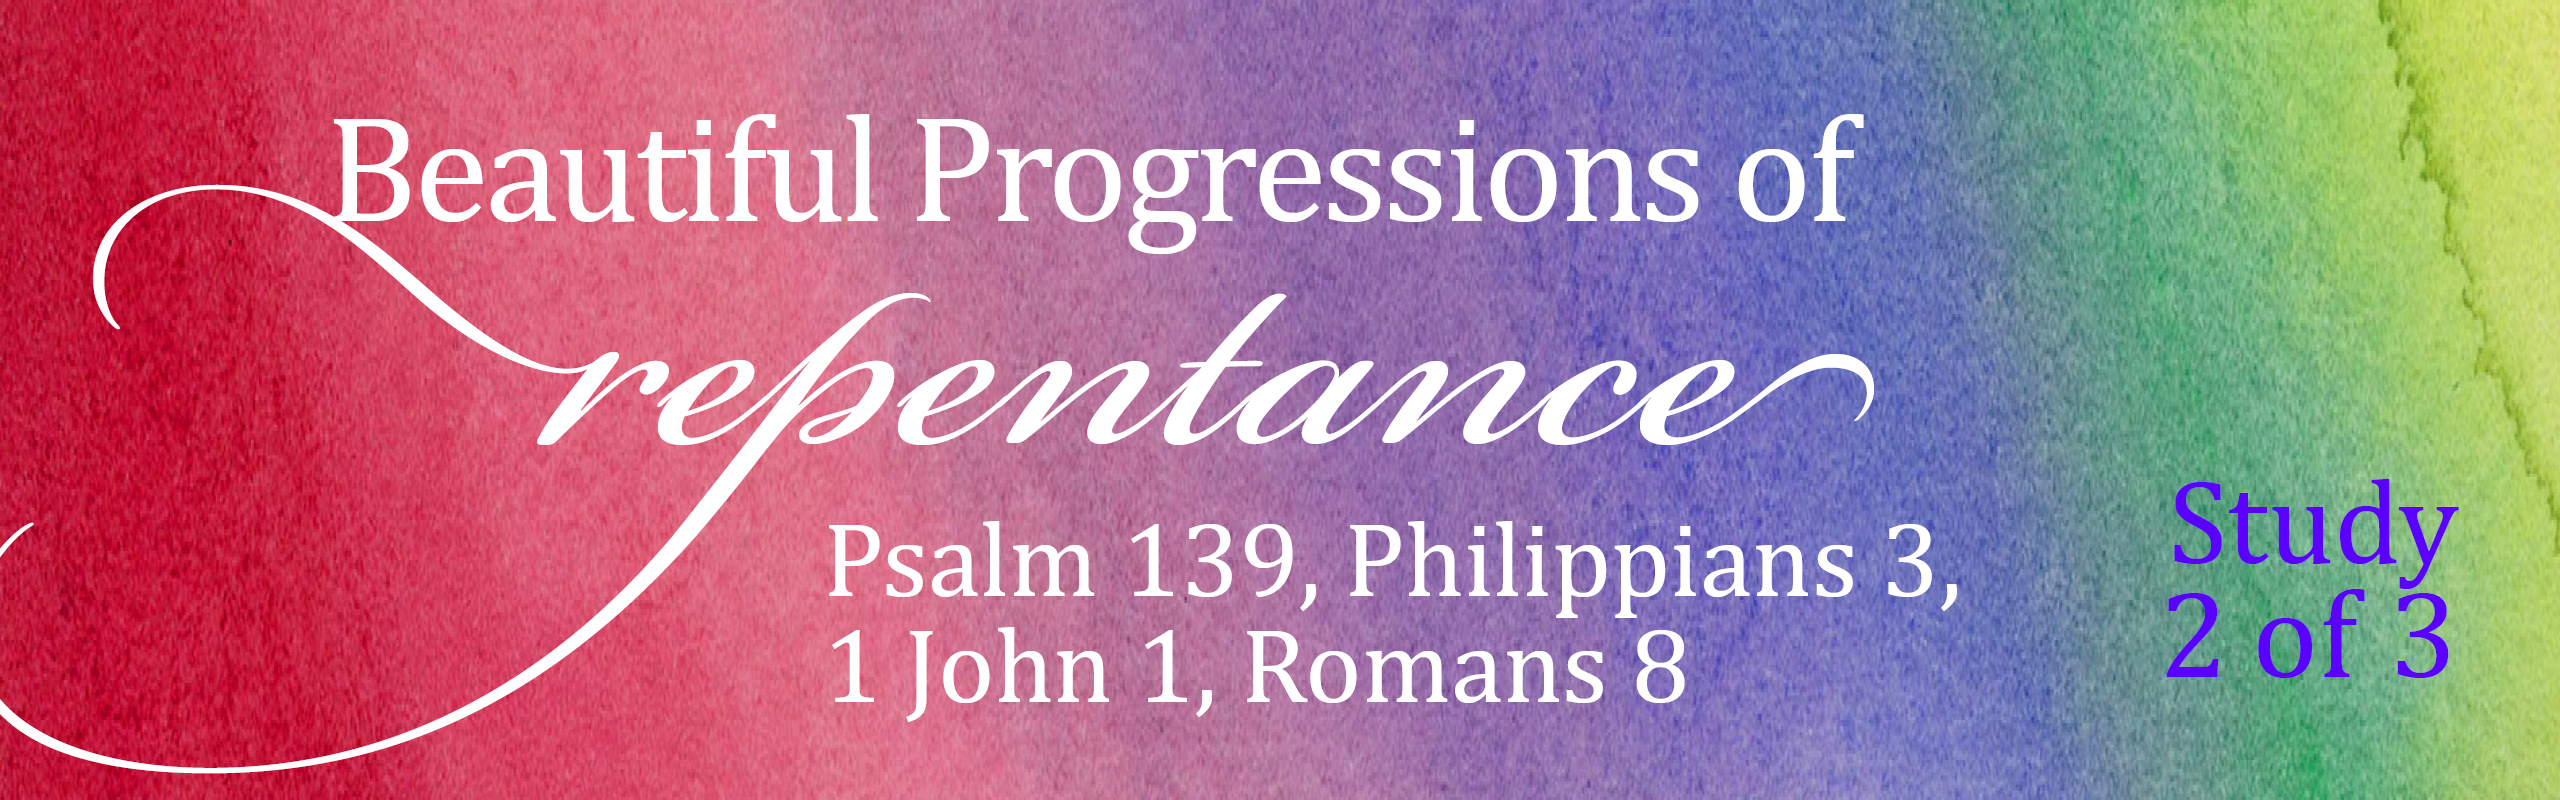 Repentance---3-Progressions-2-of-3